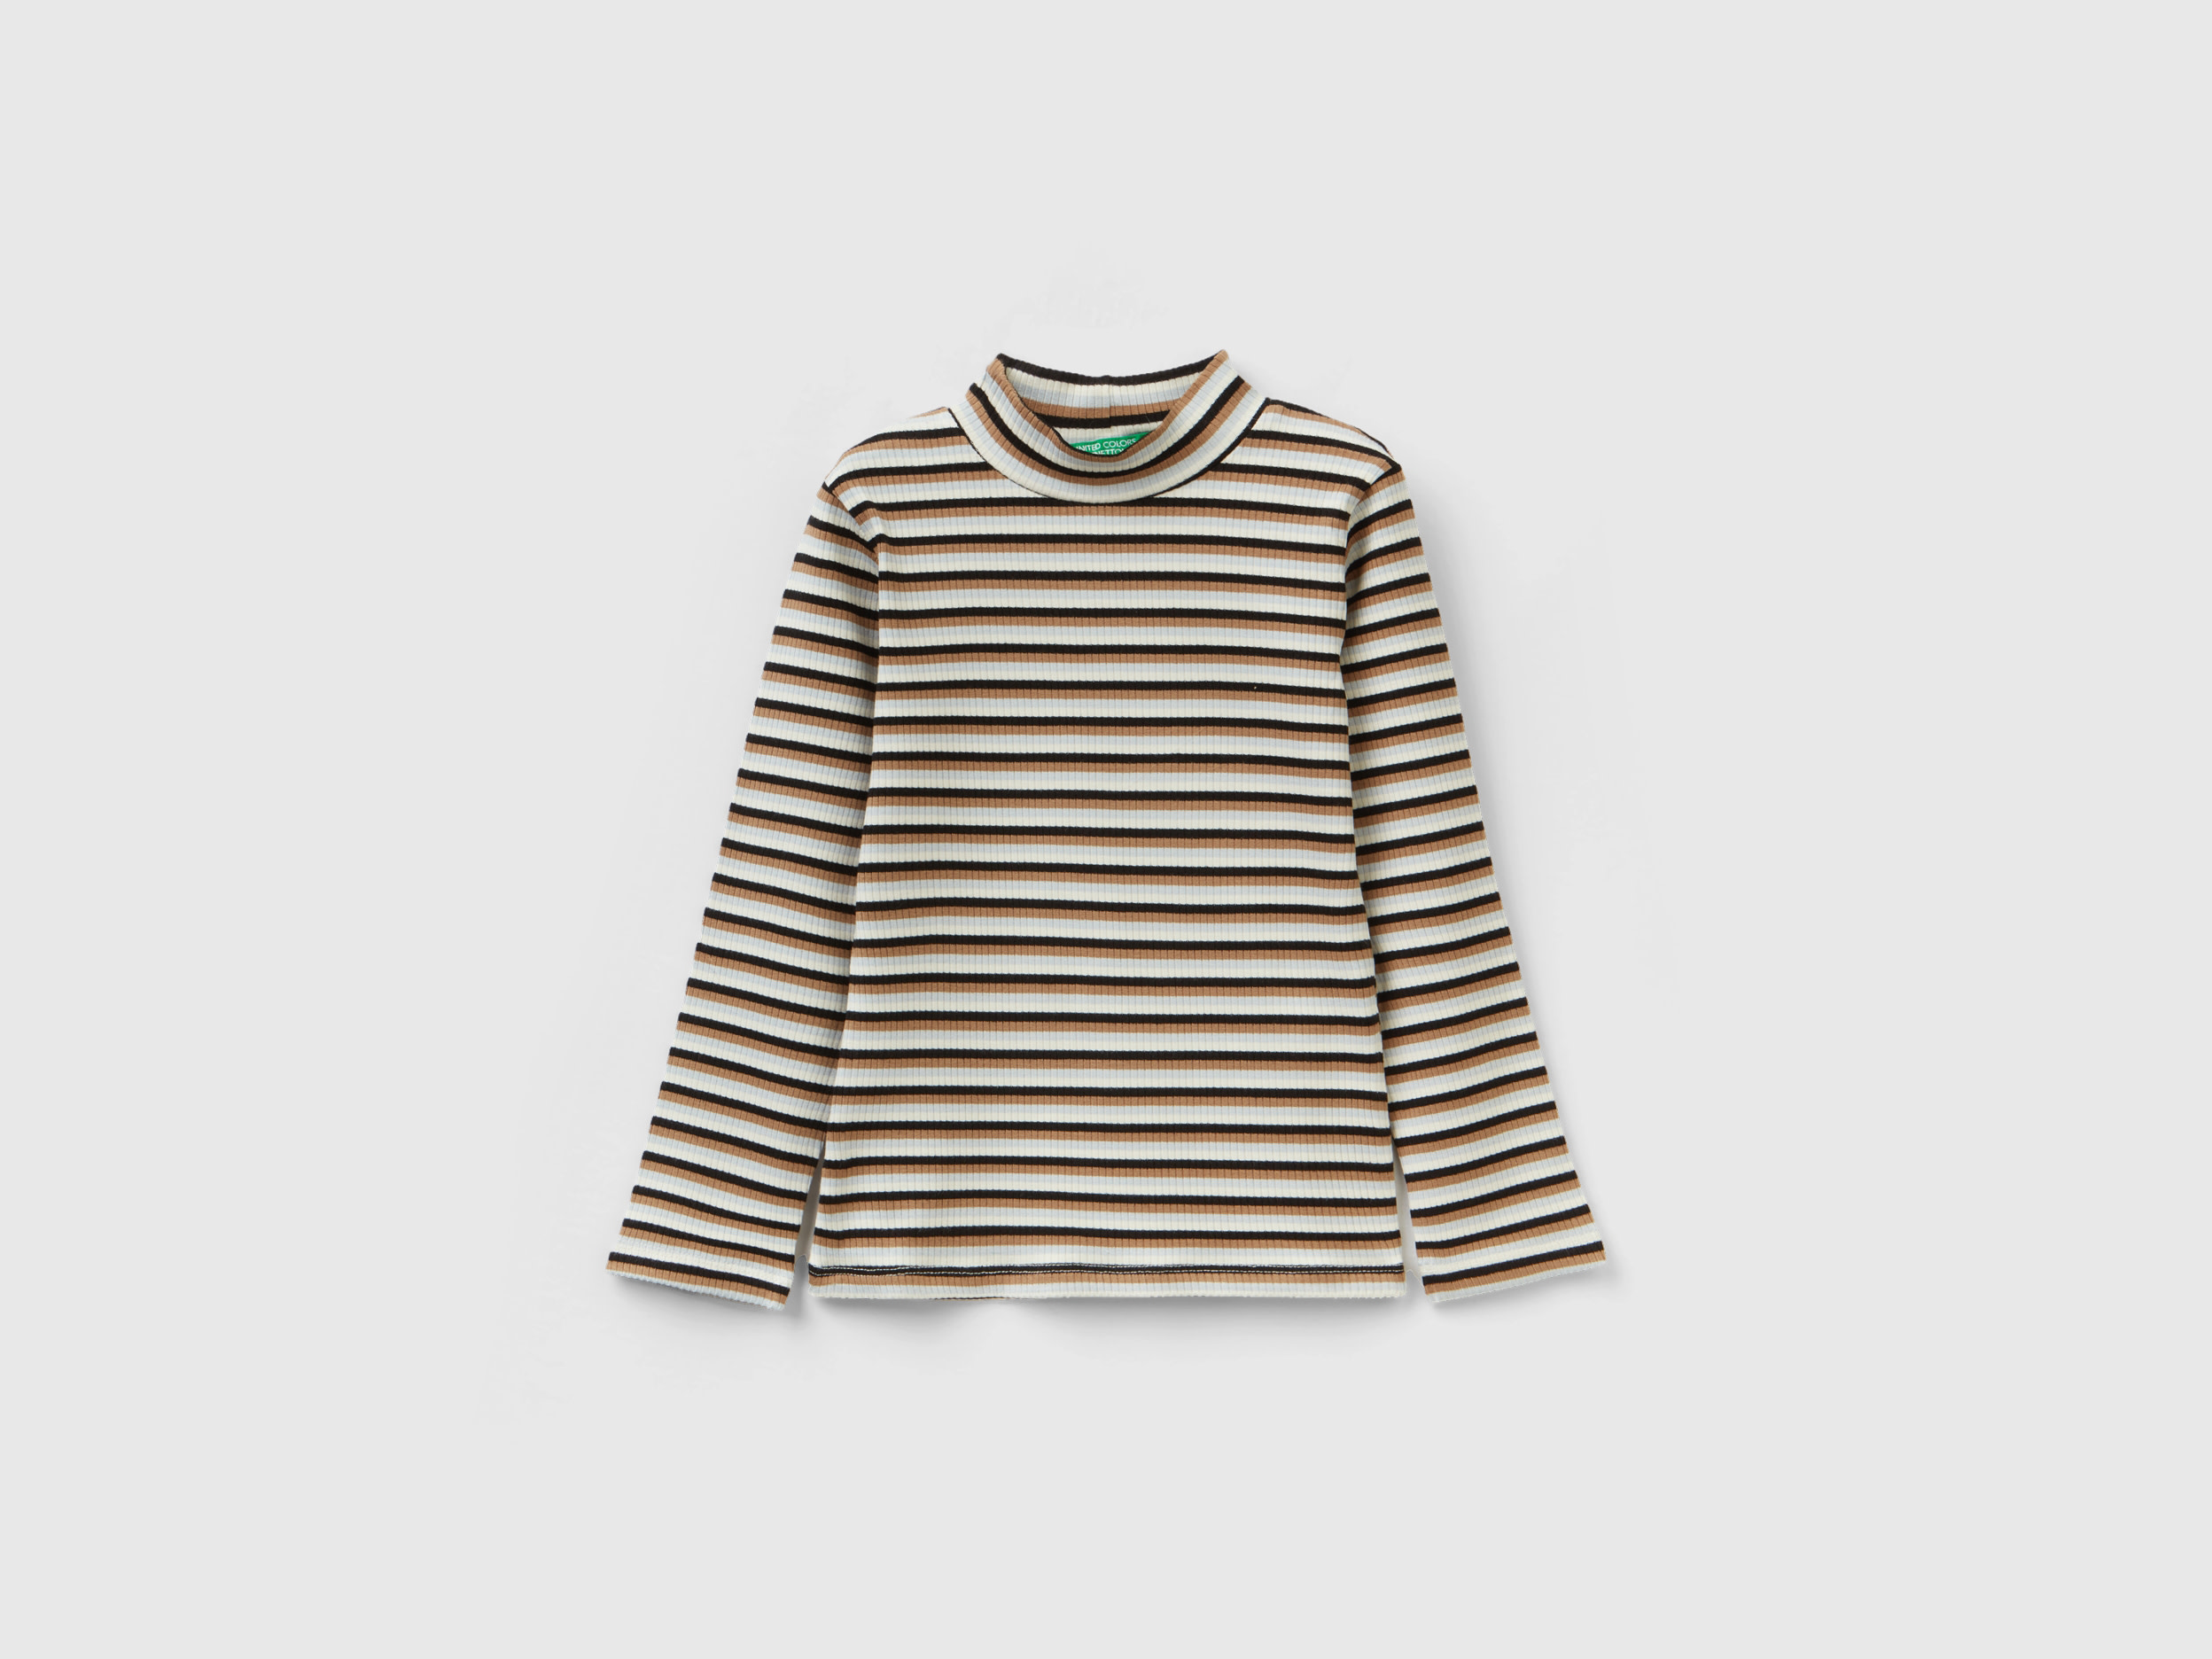 Benetton, Striped Turtleneck T-shirt, size 2-3, Multi-color, Kids